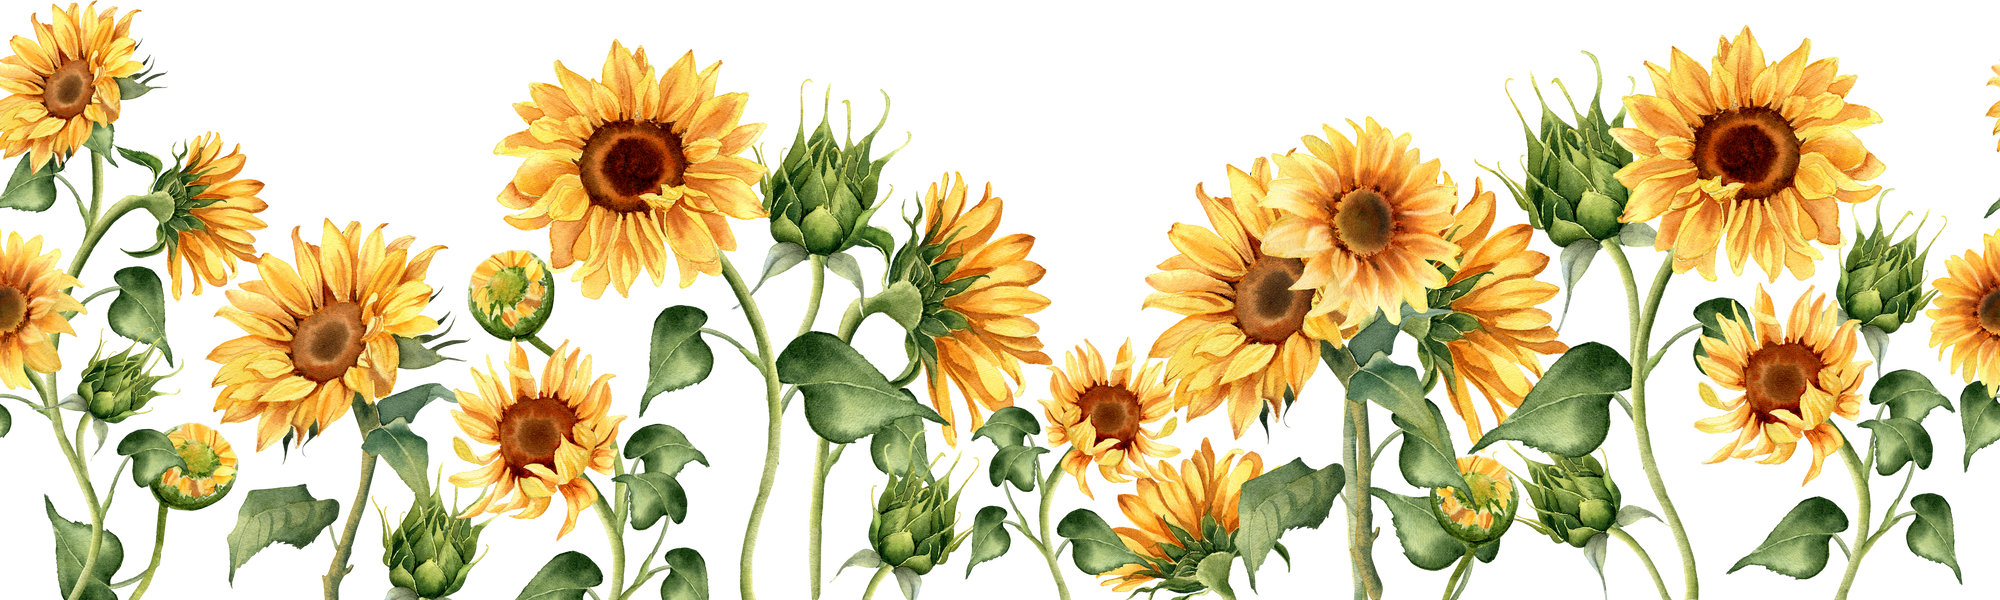 Sunflower seamless border. Watercolor illustration